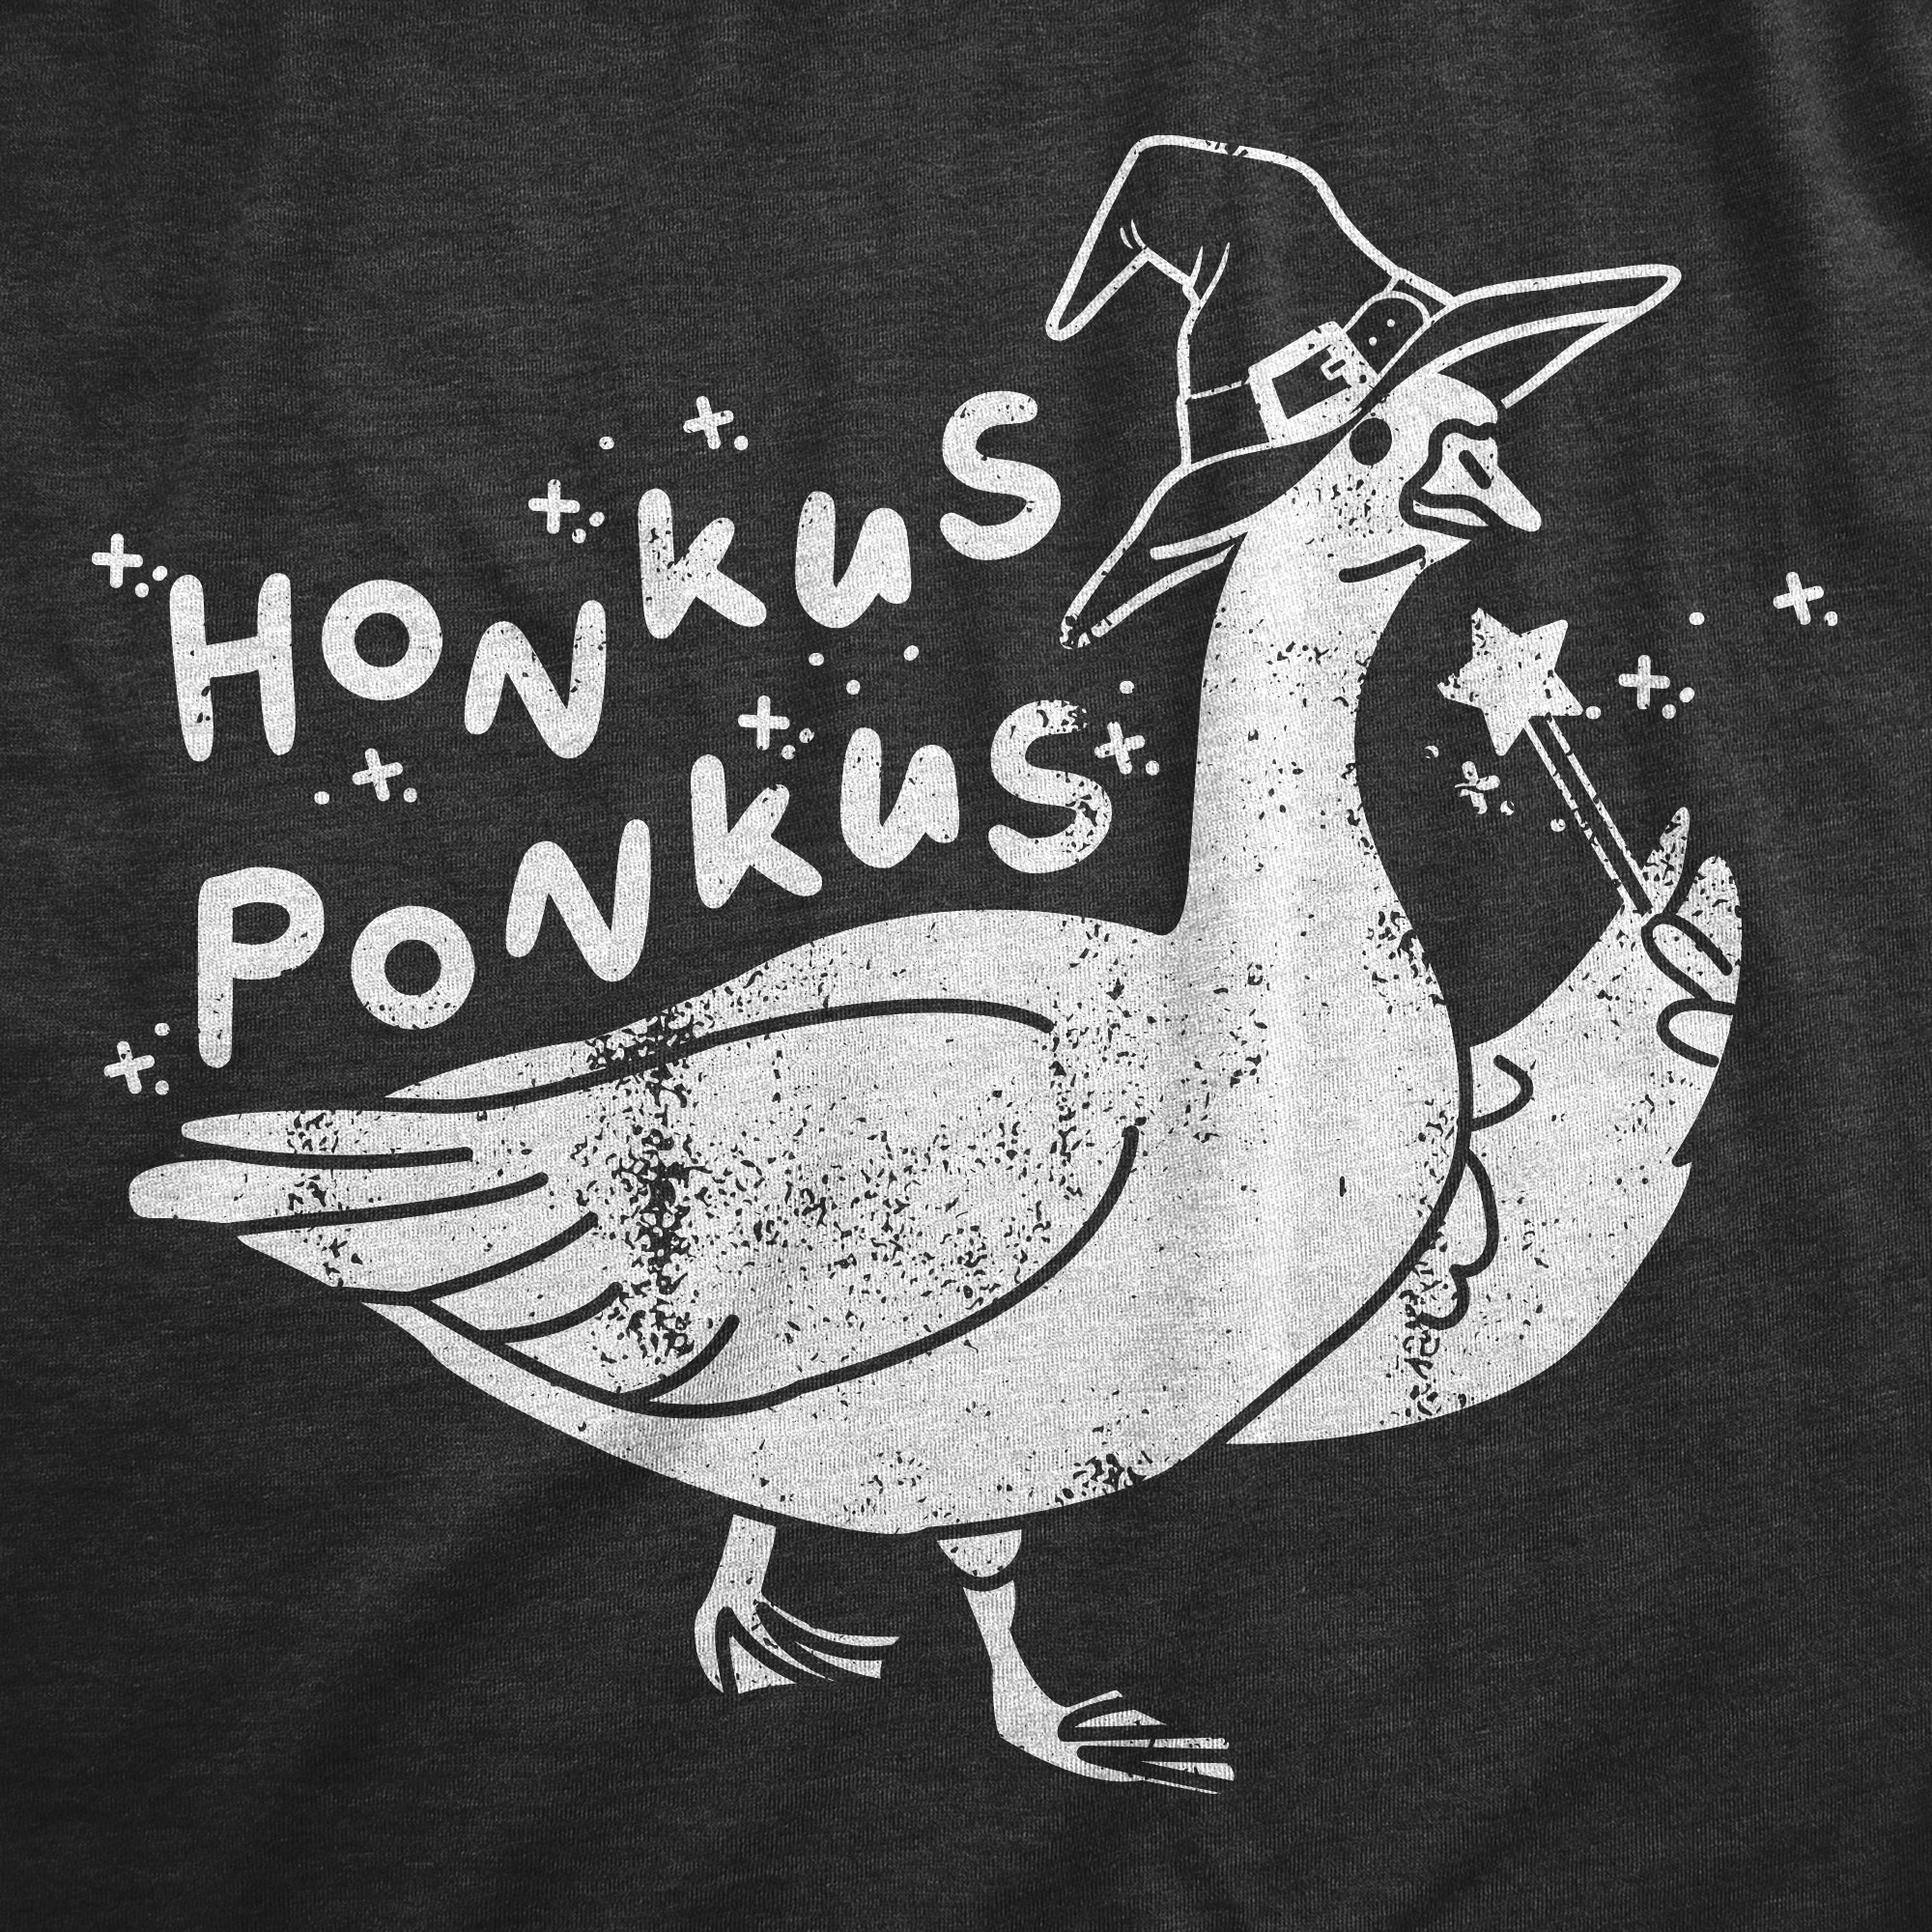 Funny Heather Black - HONKUS Honkus Ponkus Womens T Shirt Nerdy Halloween Animal Sarcastic Tee